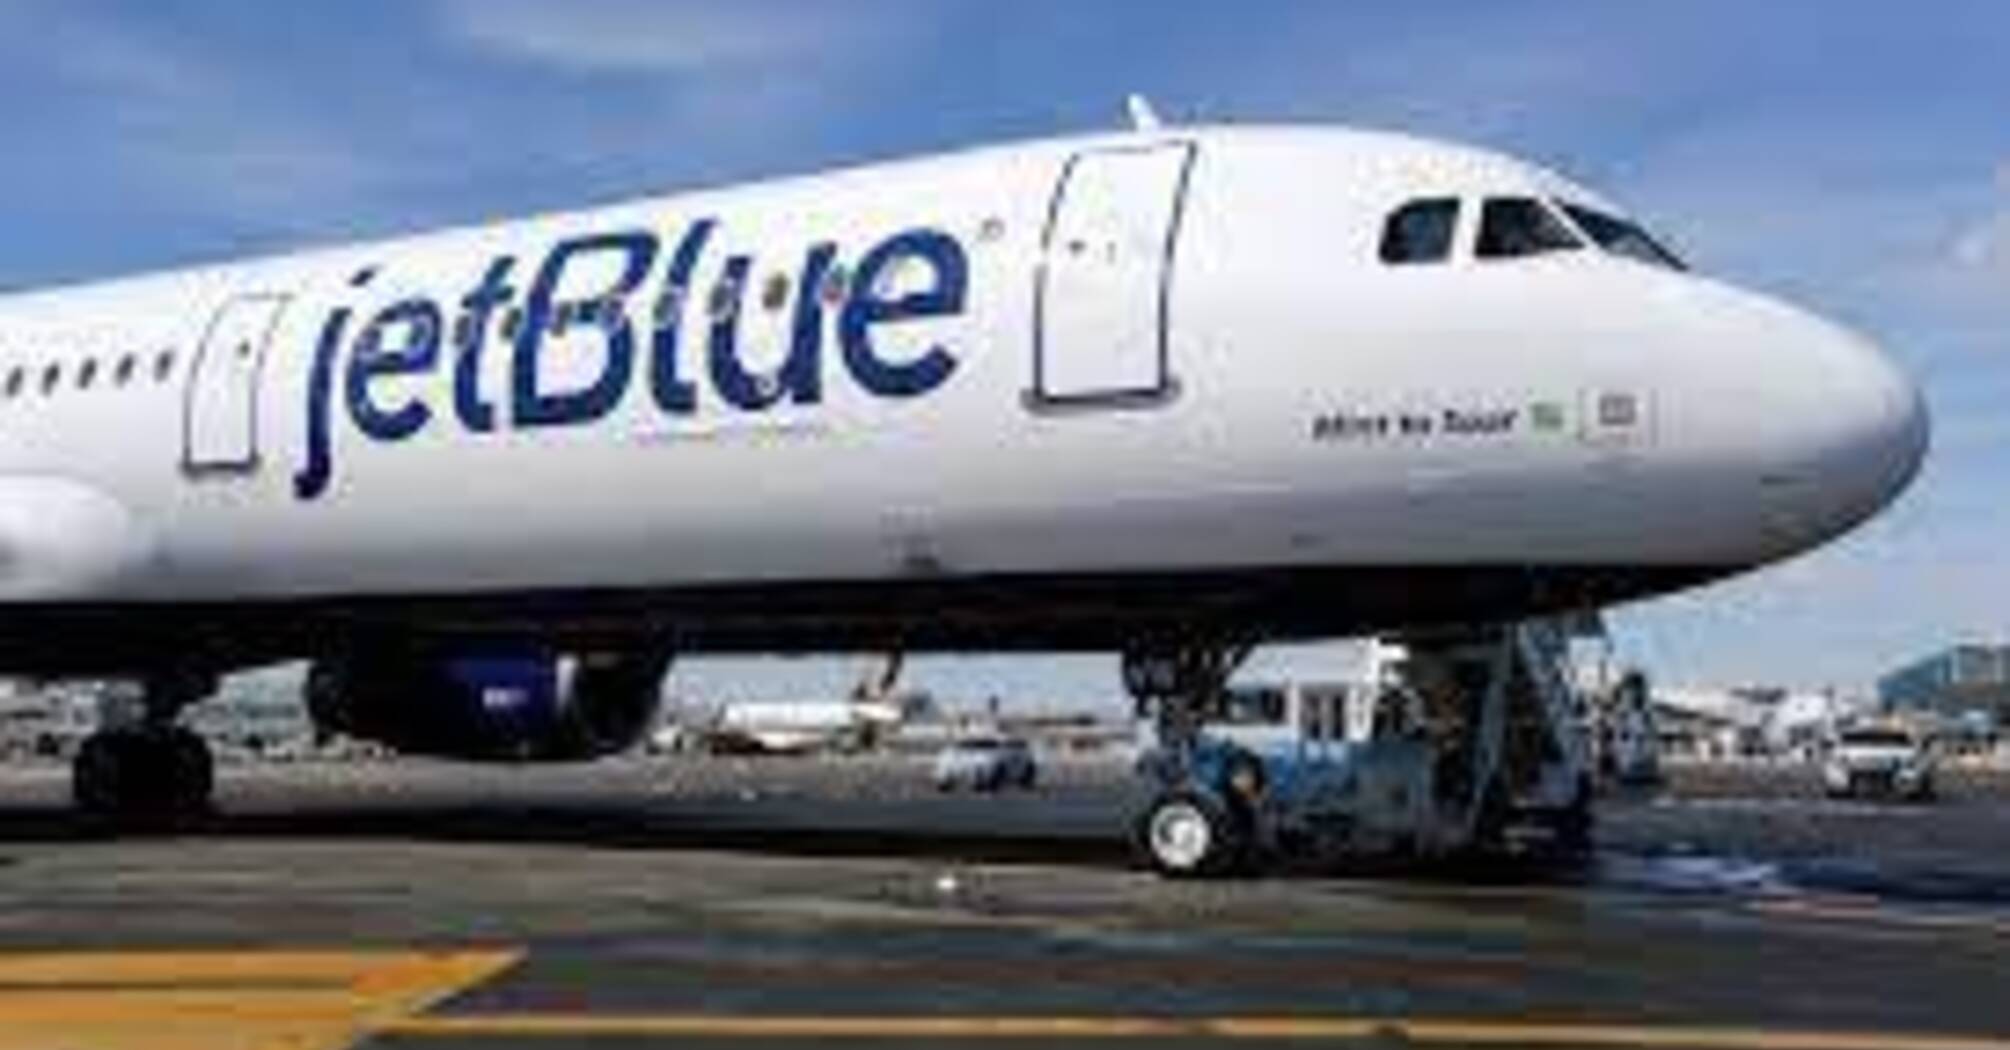 A JetBlue airplane